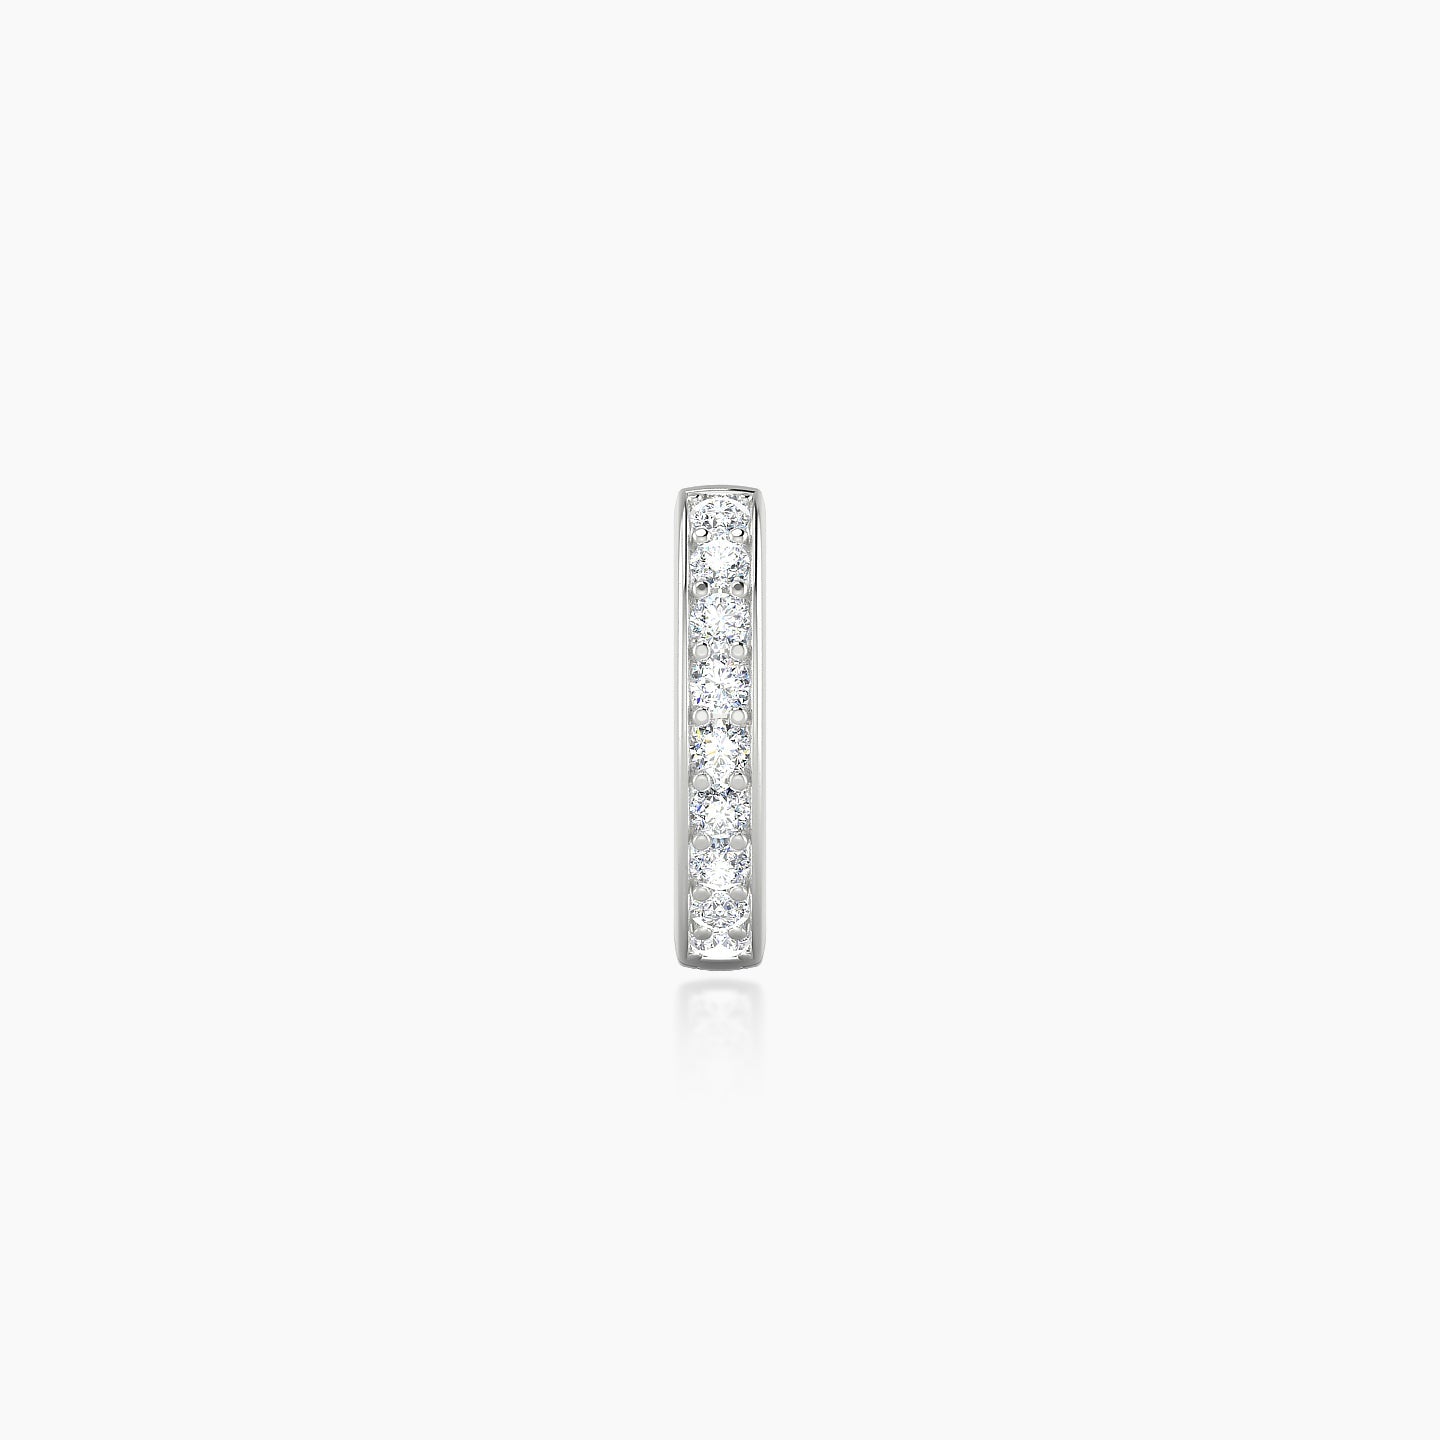 Lyssa | 18k White Gold 6.5 mm Diamond Nose Ring Piercing